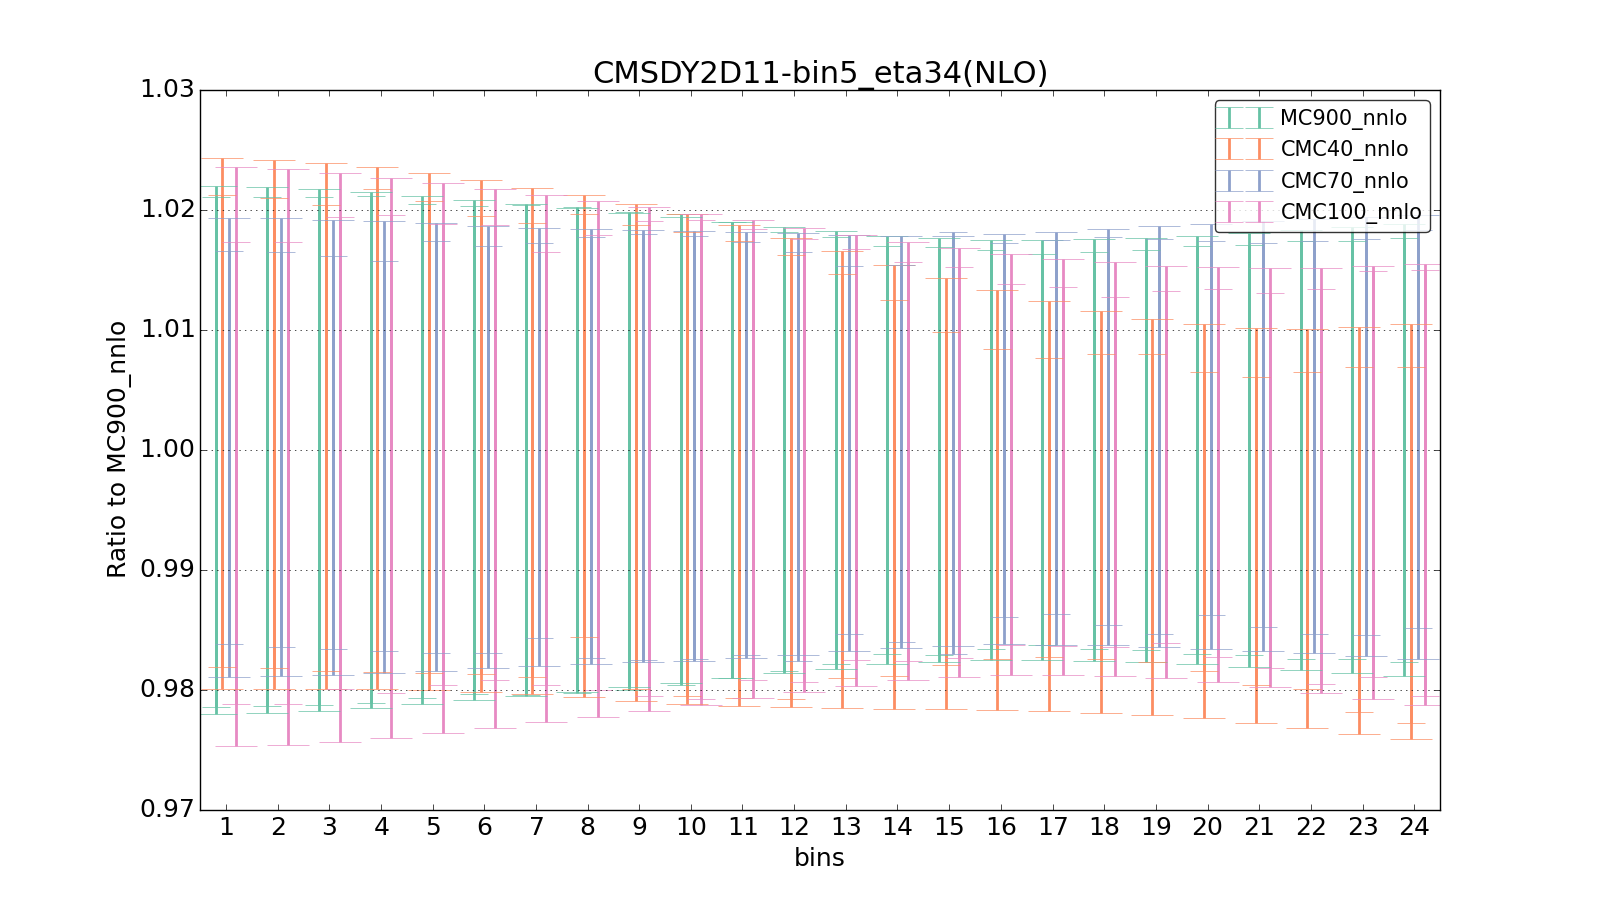 figure plots/CMCpheno/group_0_ciplot_CMSDY2D11-bin5_eta34(NLO).png